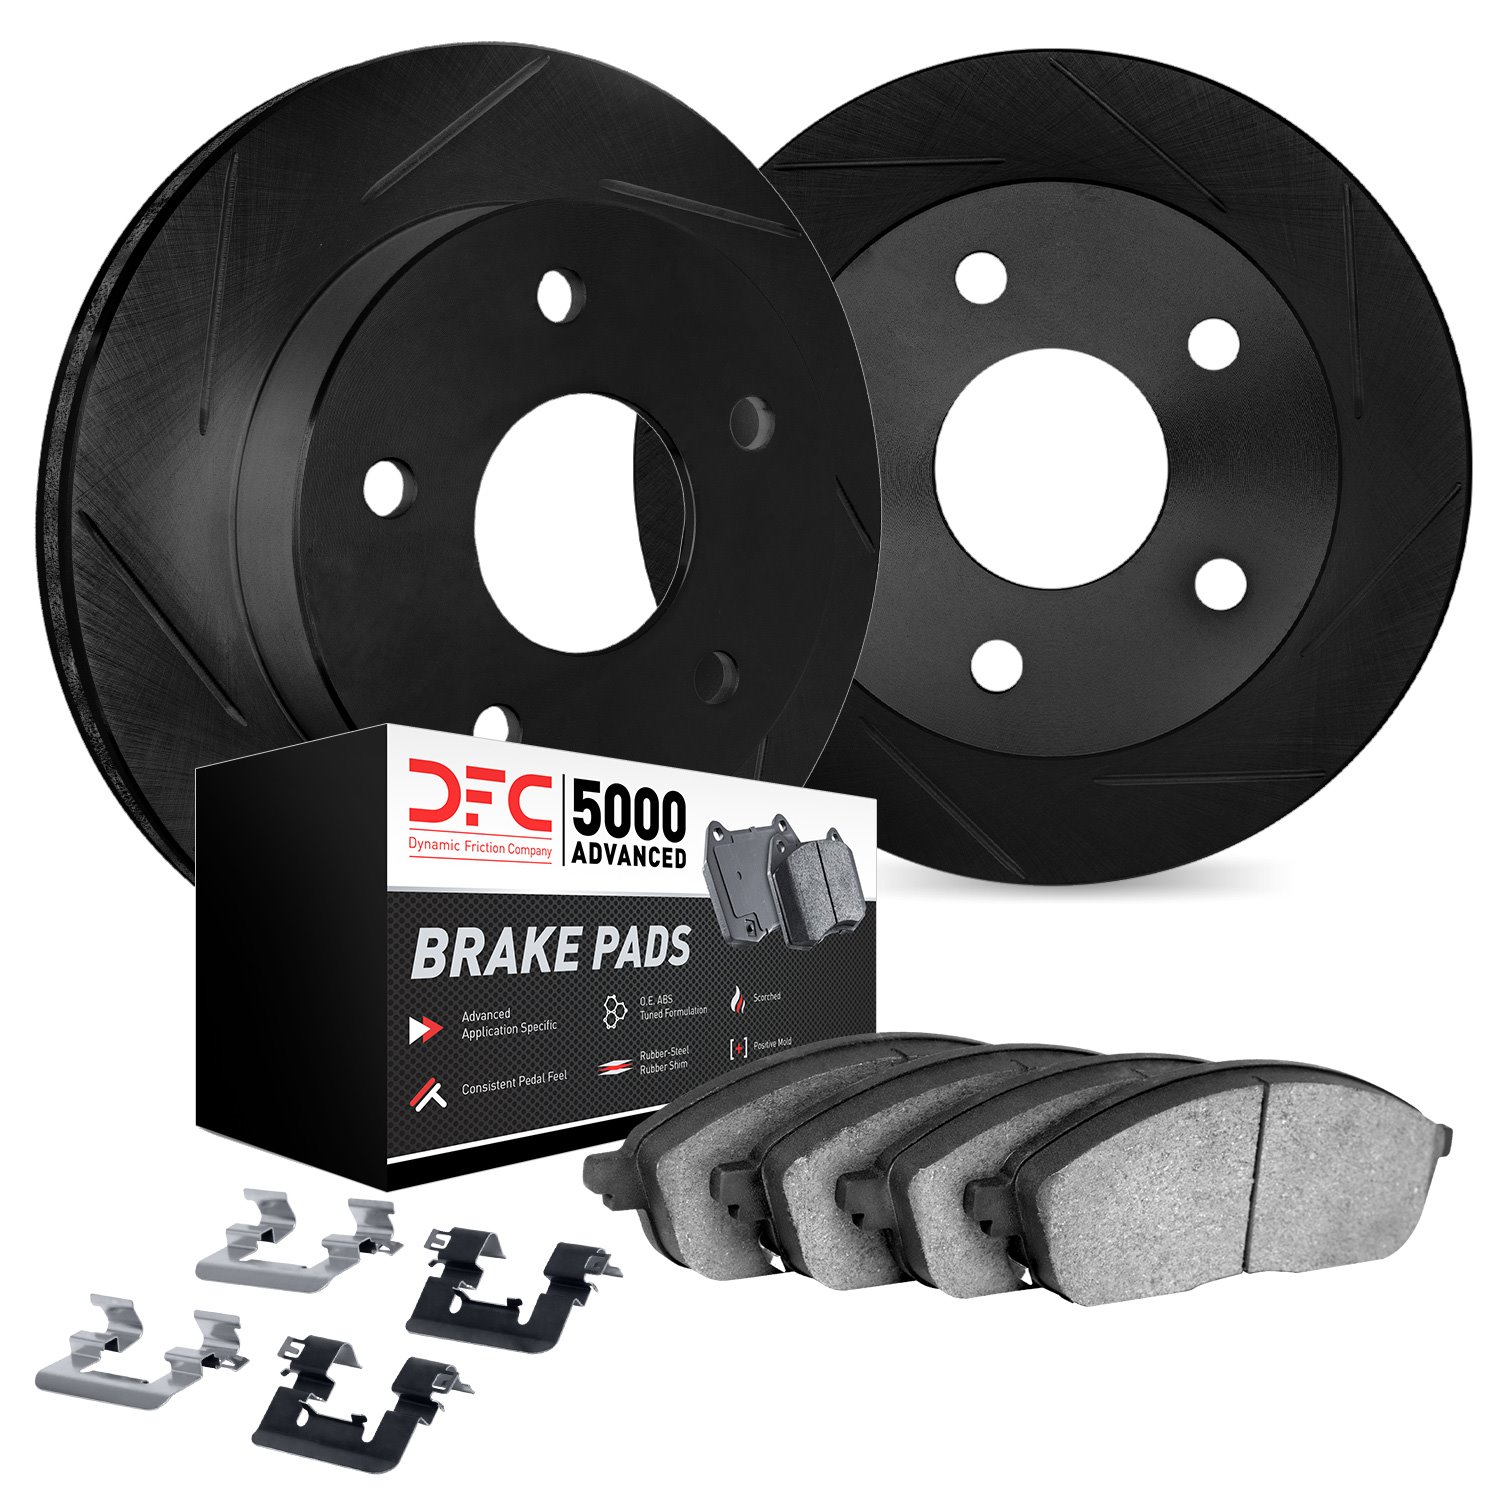 3512-54213 Slotted Brake Rotors w/5000 Advanced Brake Pads Kit & Hardware [Black], 2013-2019 Ford/Lincoln/Mercury/Mazda, Positio